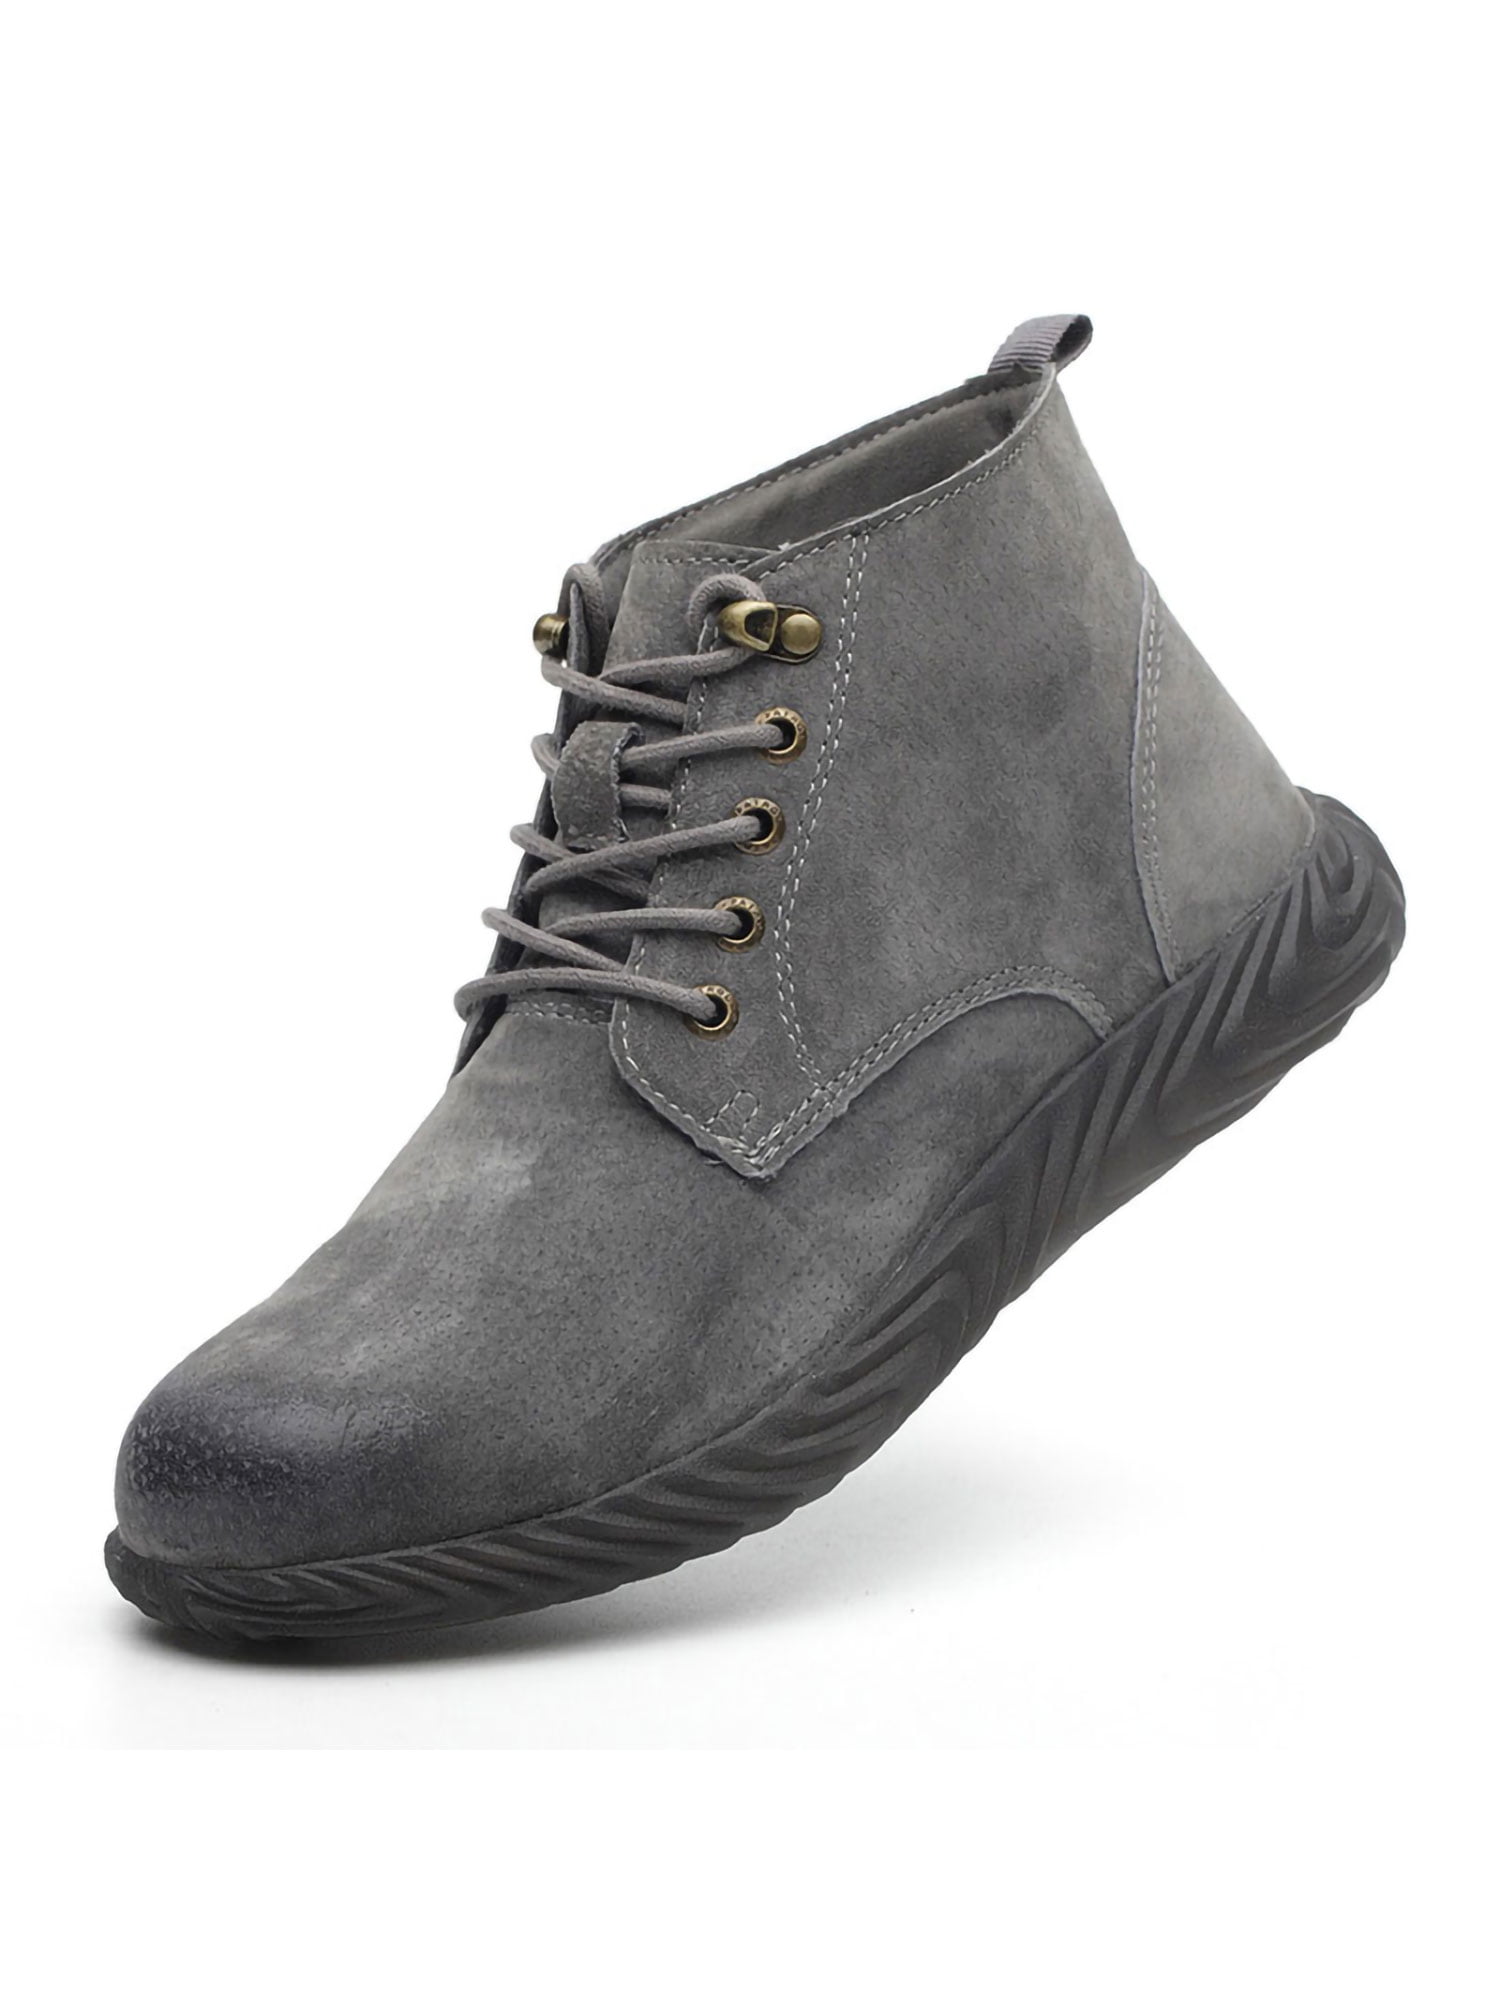 Mens Women High Top Work Safety Shoes Steel Toe Boots Indestructible Lightweight 